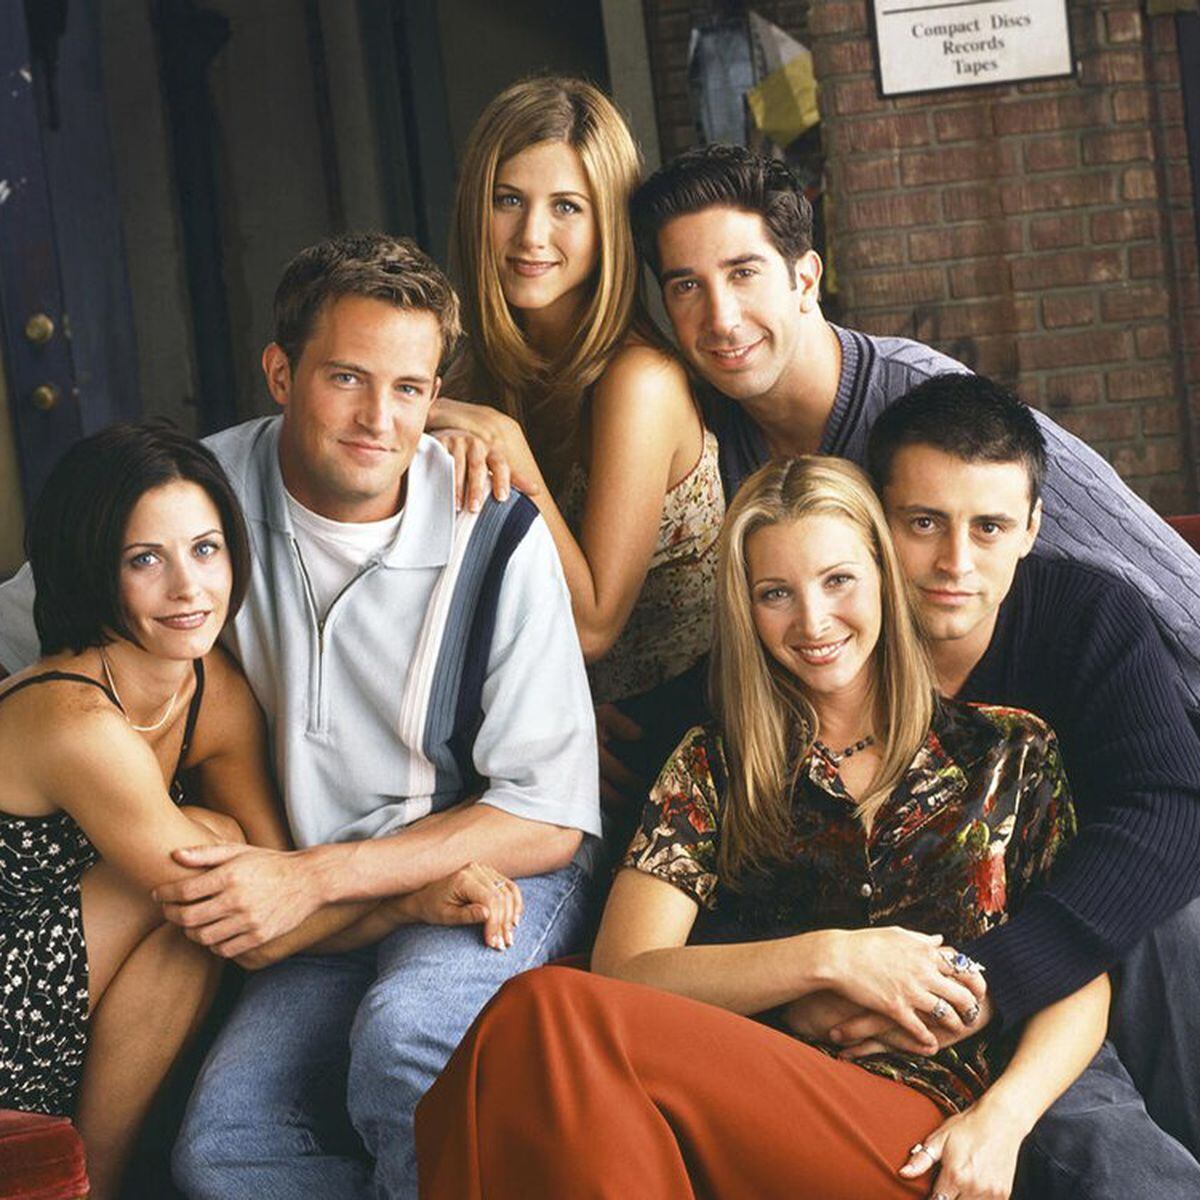 Friends 2 temporada online